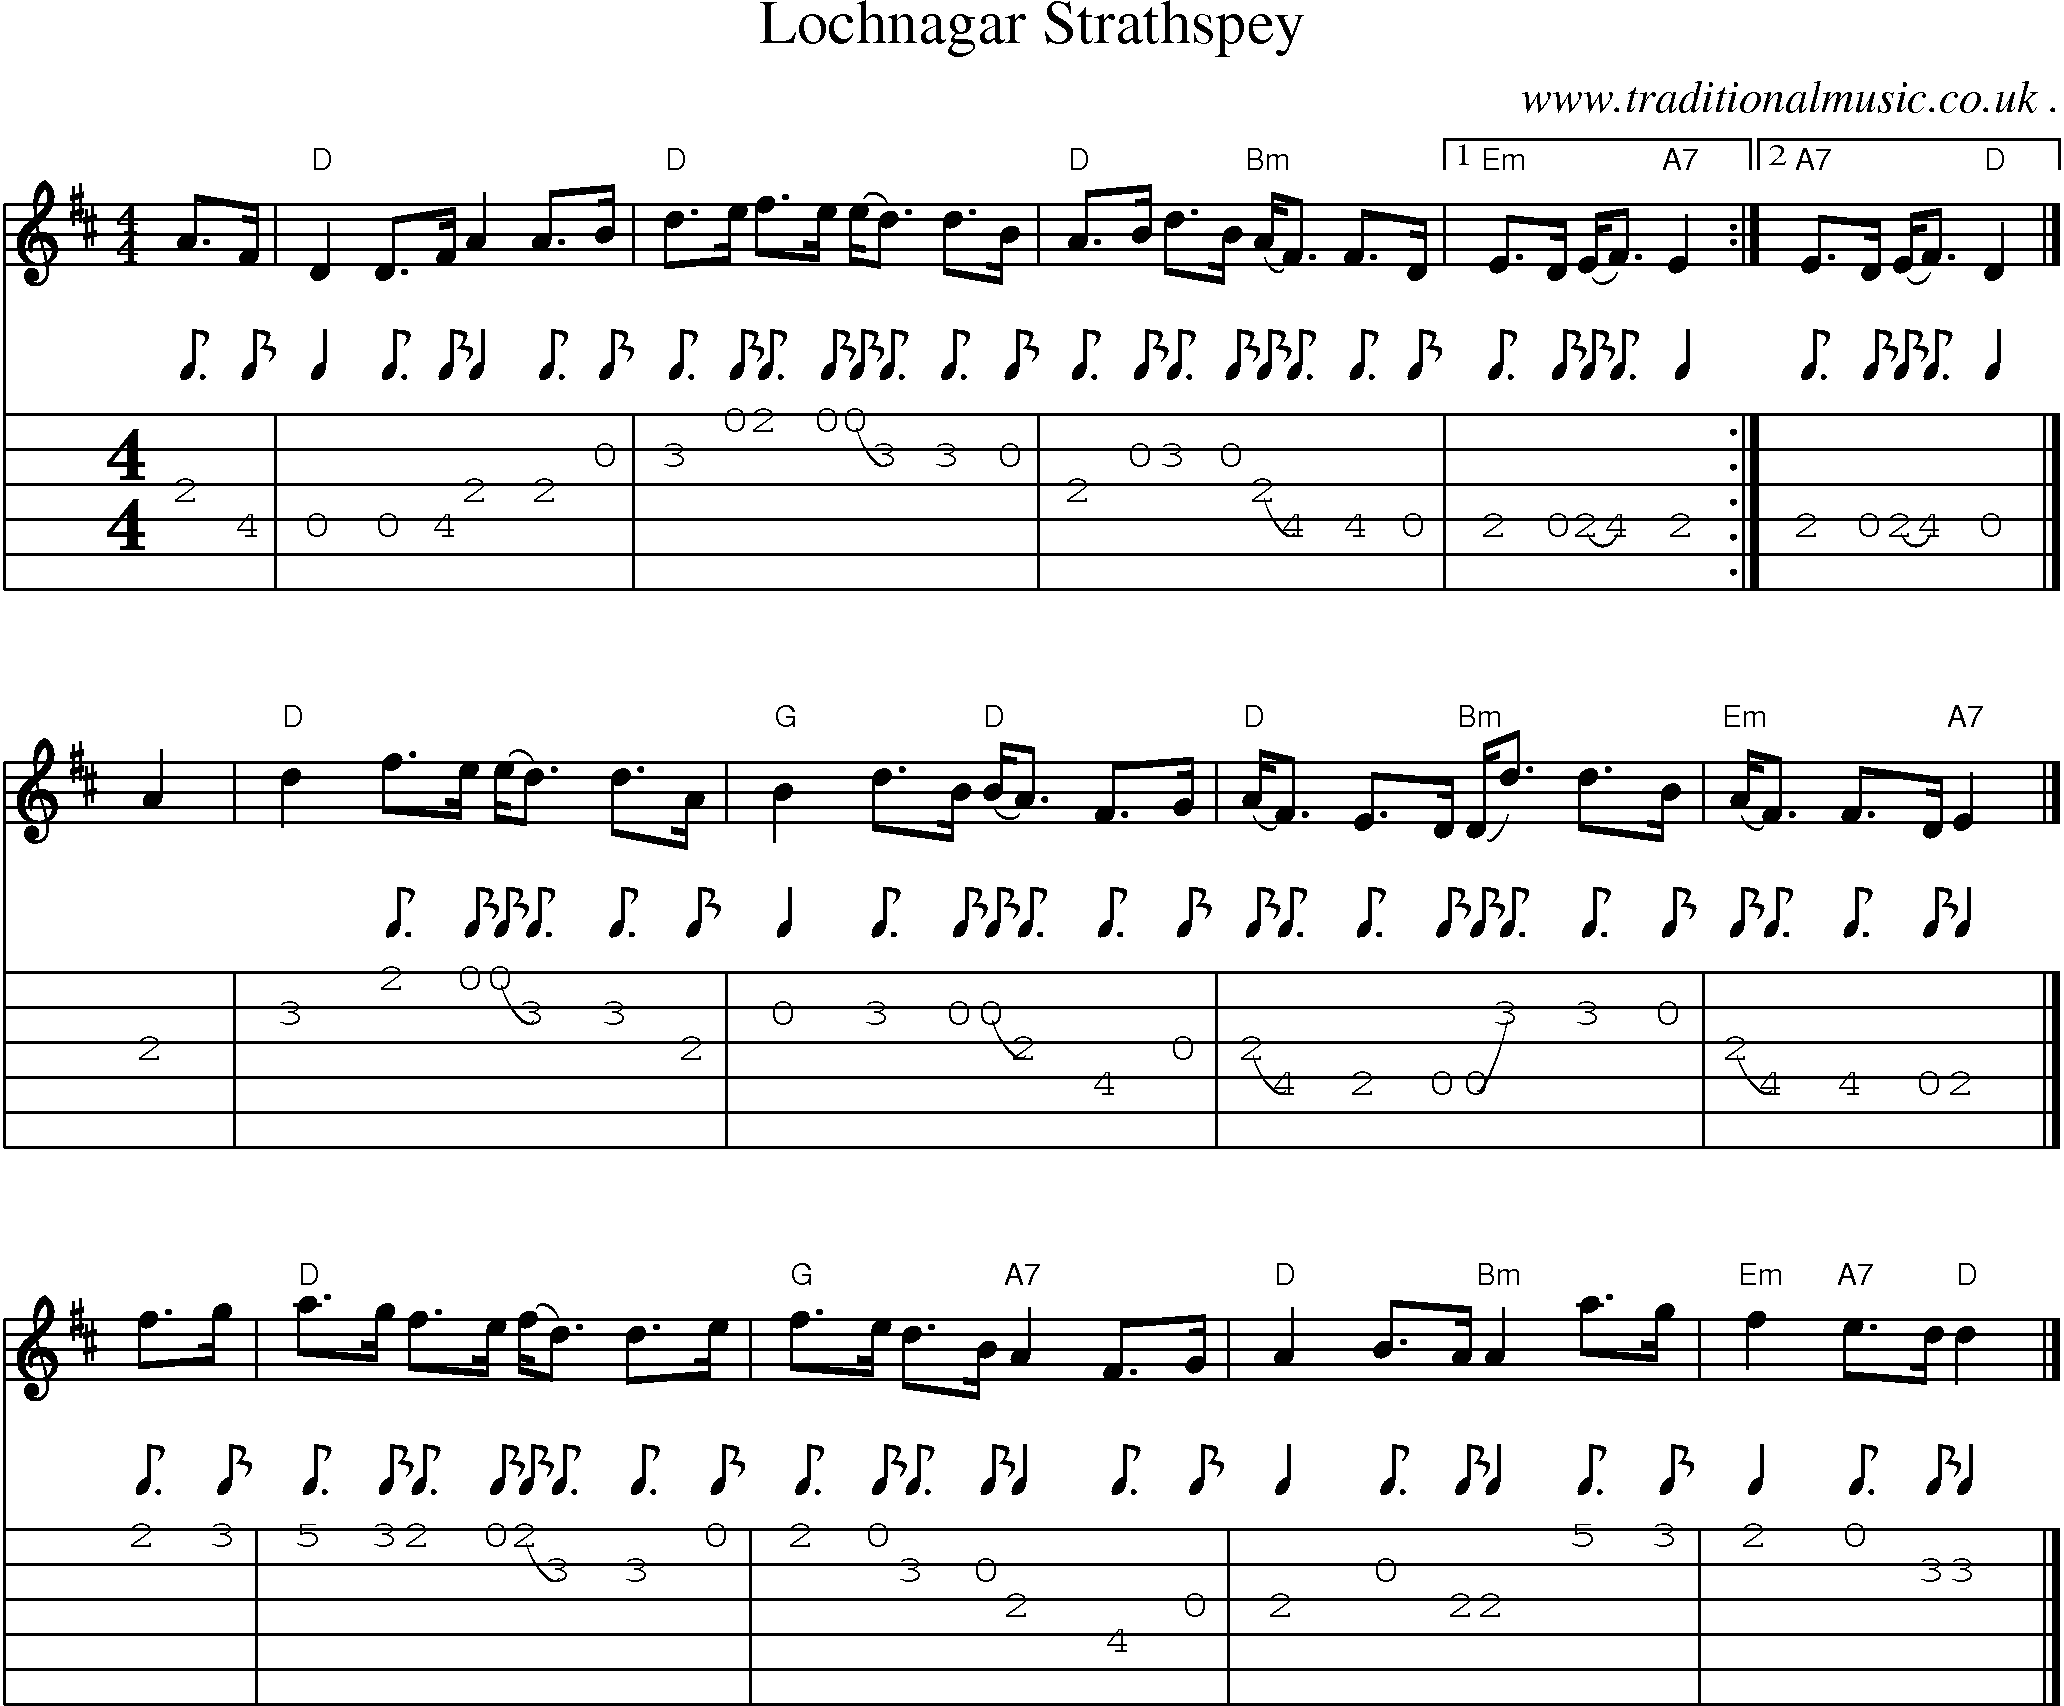 Sheet-music  score, Chords and Guitar Tabs for Lochnagar Strathspey